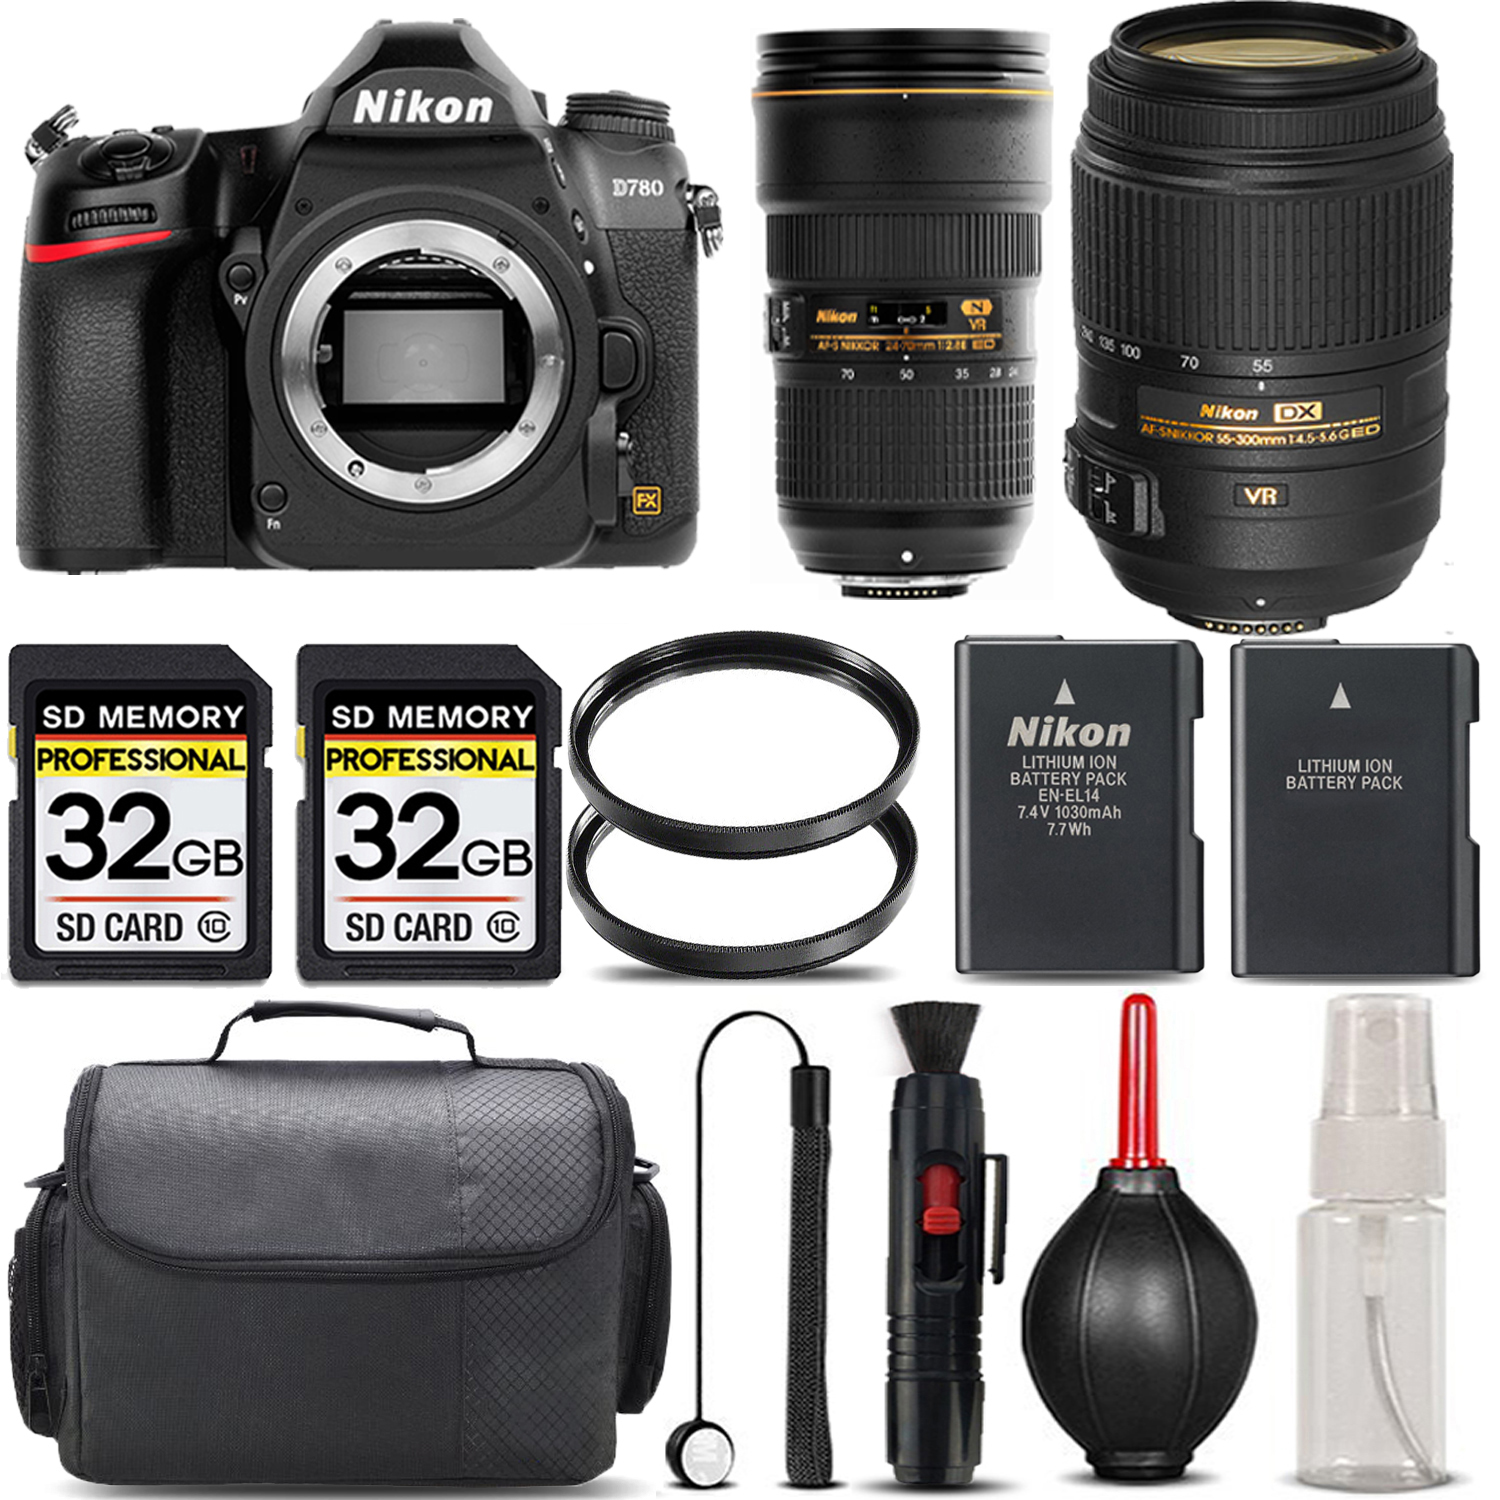 D780 DSLR Camera + 55- 300mm Lens + 24-70mm Lens + Handbag - SAVE BIG KIT *FREE SHIPPING*